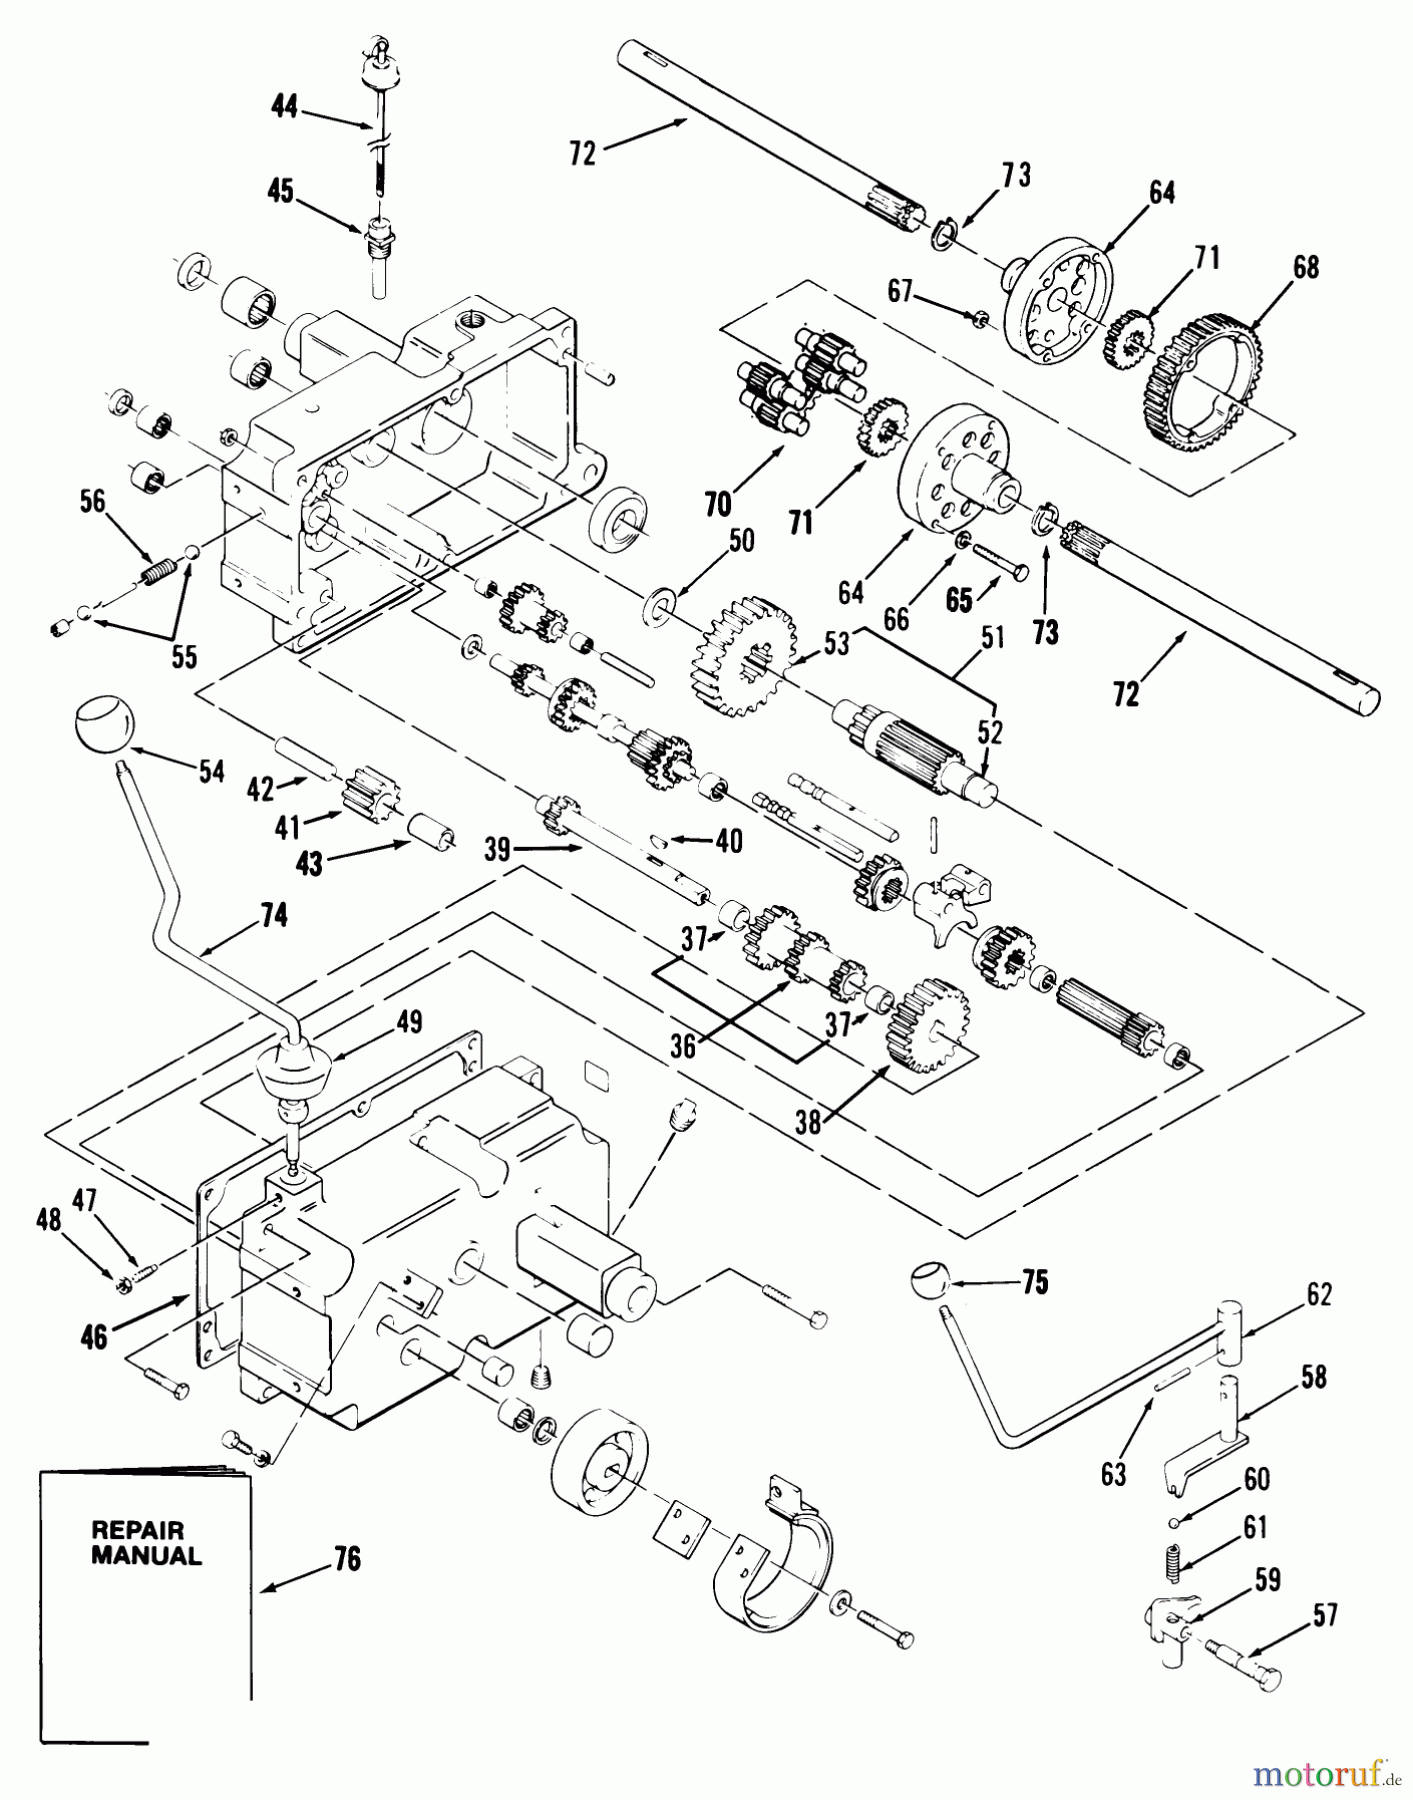  Toro Neu Mowers, Lawn & Garden Tractor Seite 1 31-16O801 (416-8) - Toro 416-8 Garden Tractor, 1989 MECHANICAL TRANSMISSION 8-SPEED #2